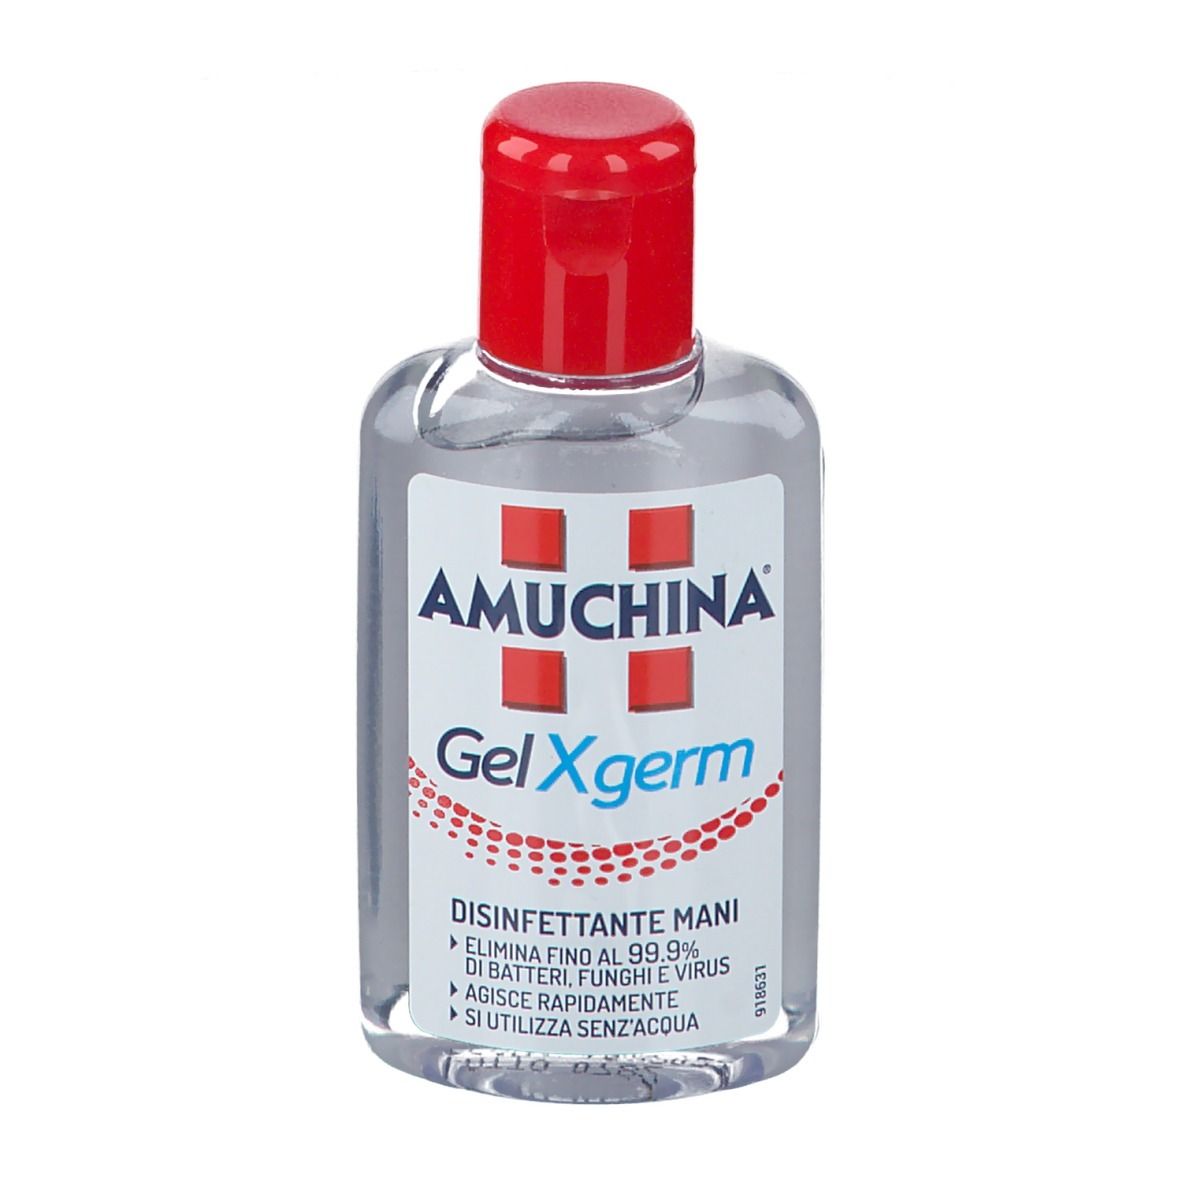 AMUCHINA - gel xgerm disinfettante mani - 80 ml - ePrice